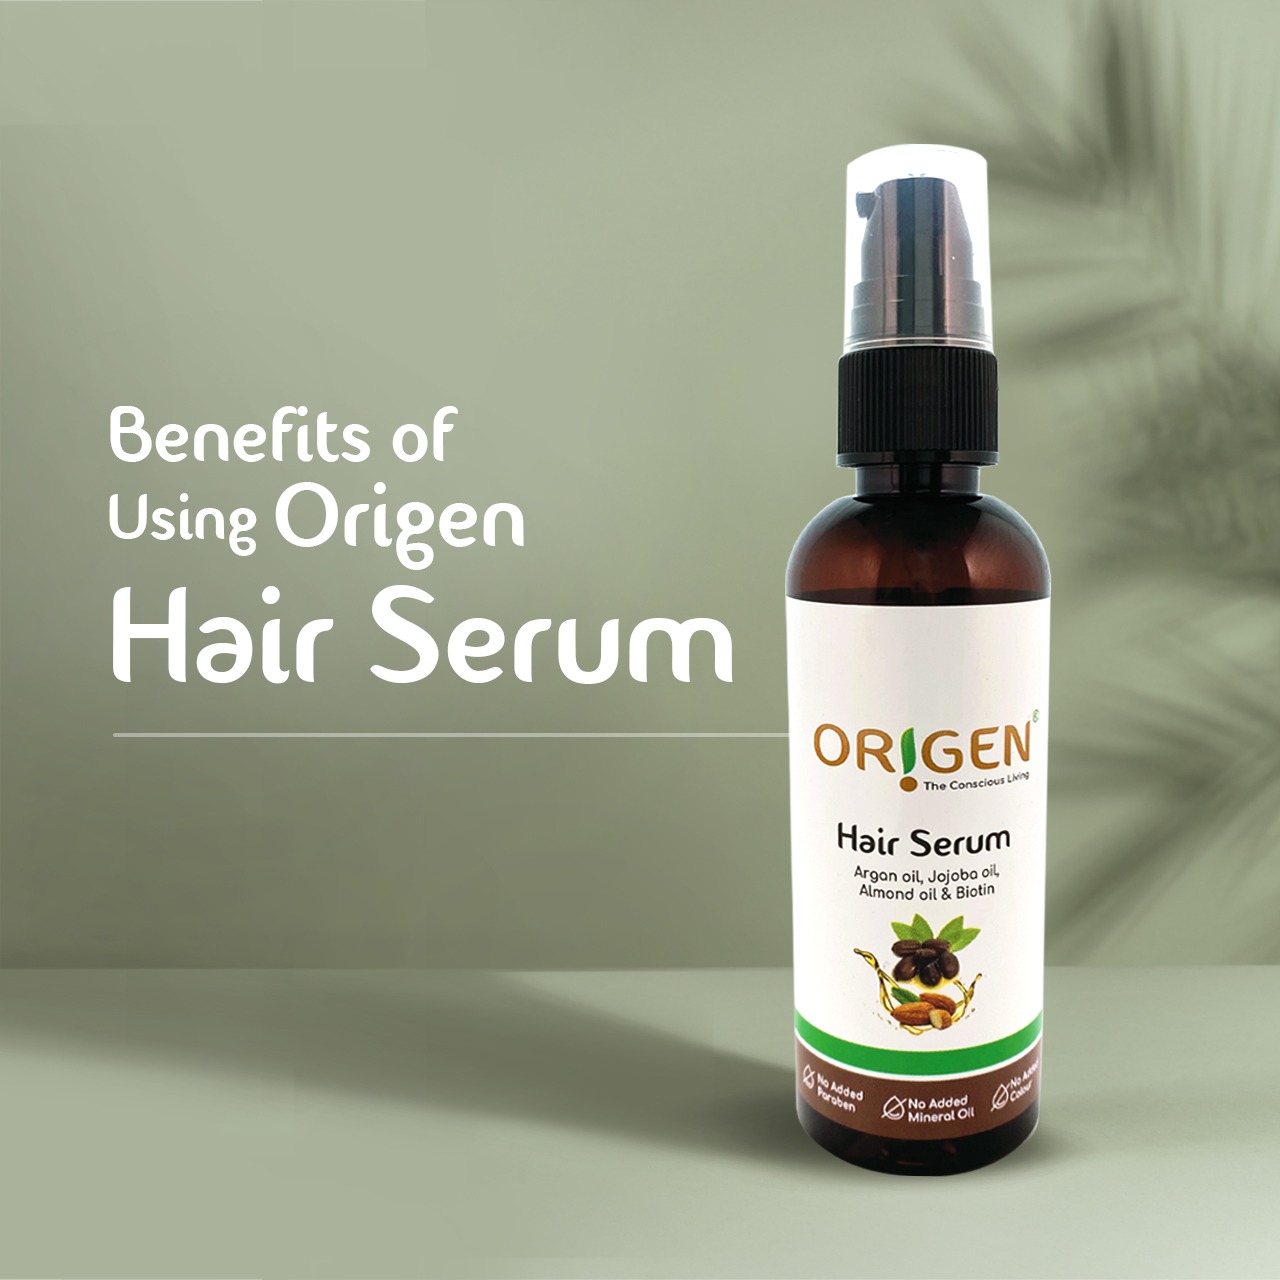 Benefits of Using Origen Hair Serum